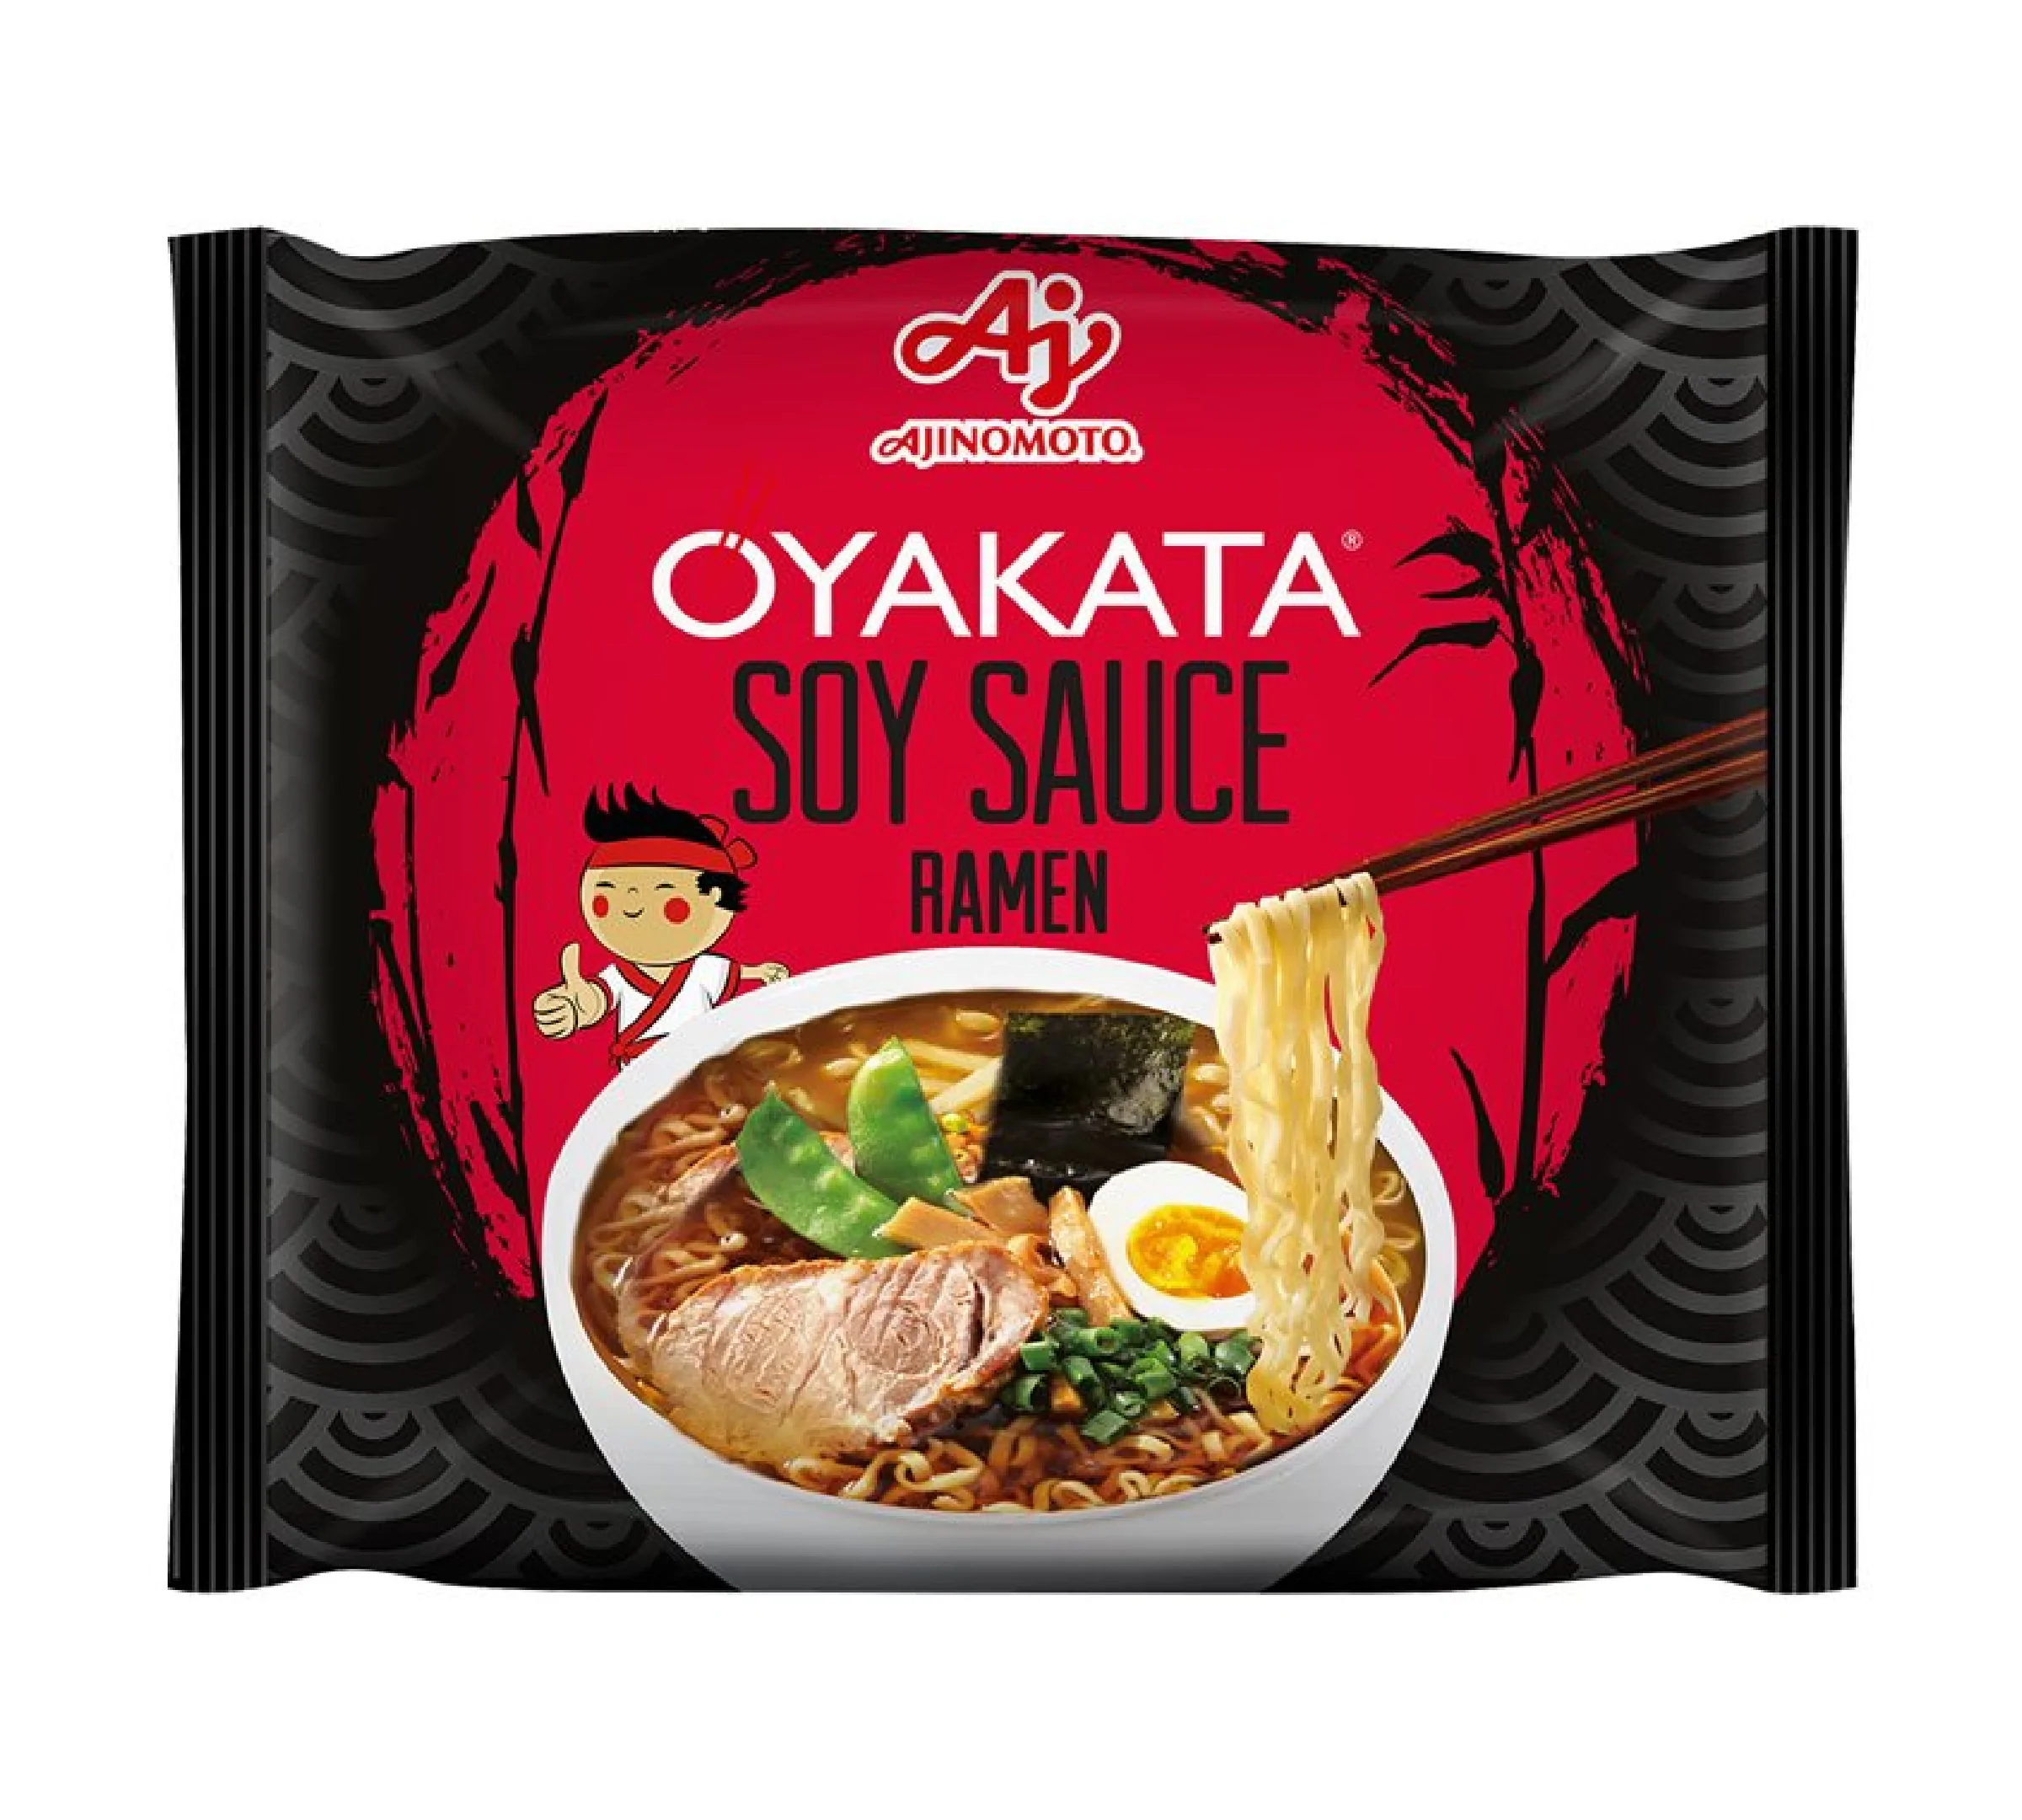 Ajinomoto Oyakata Soy Sauce Ramen 83g